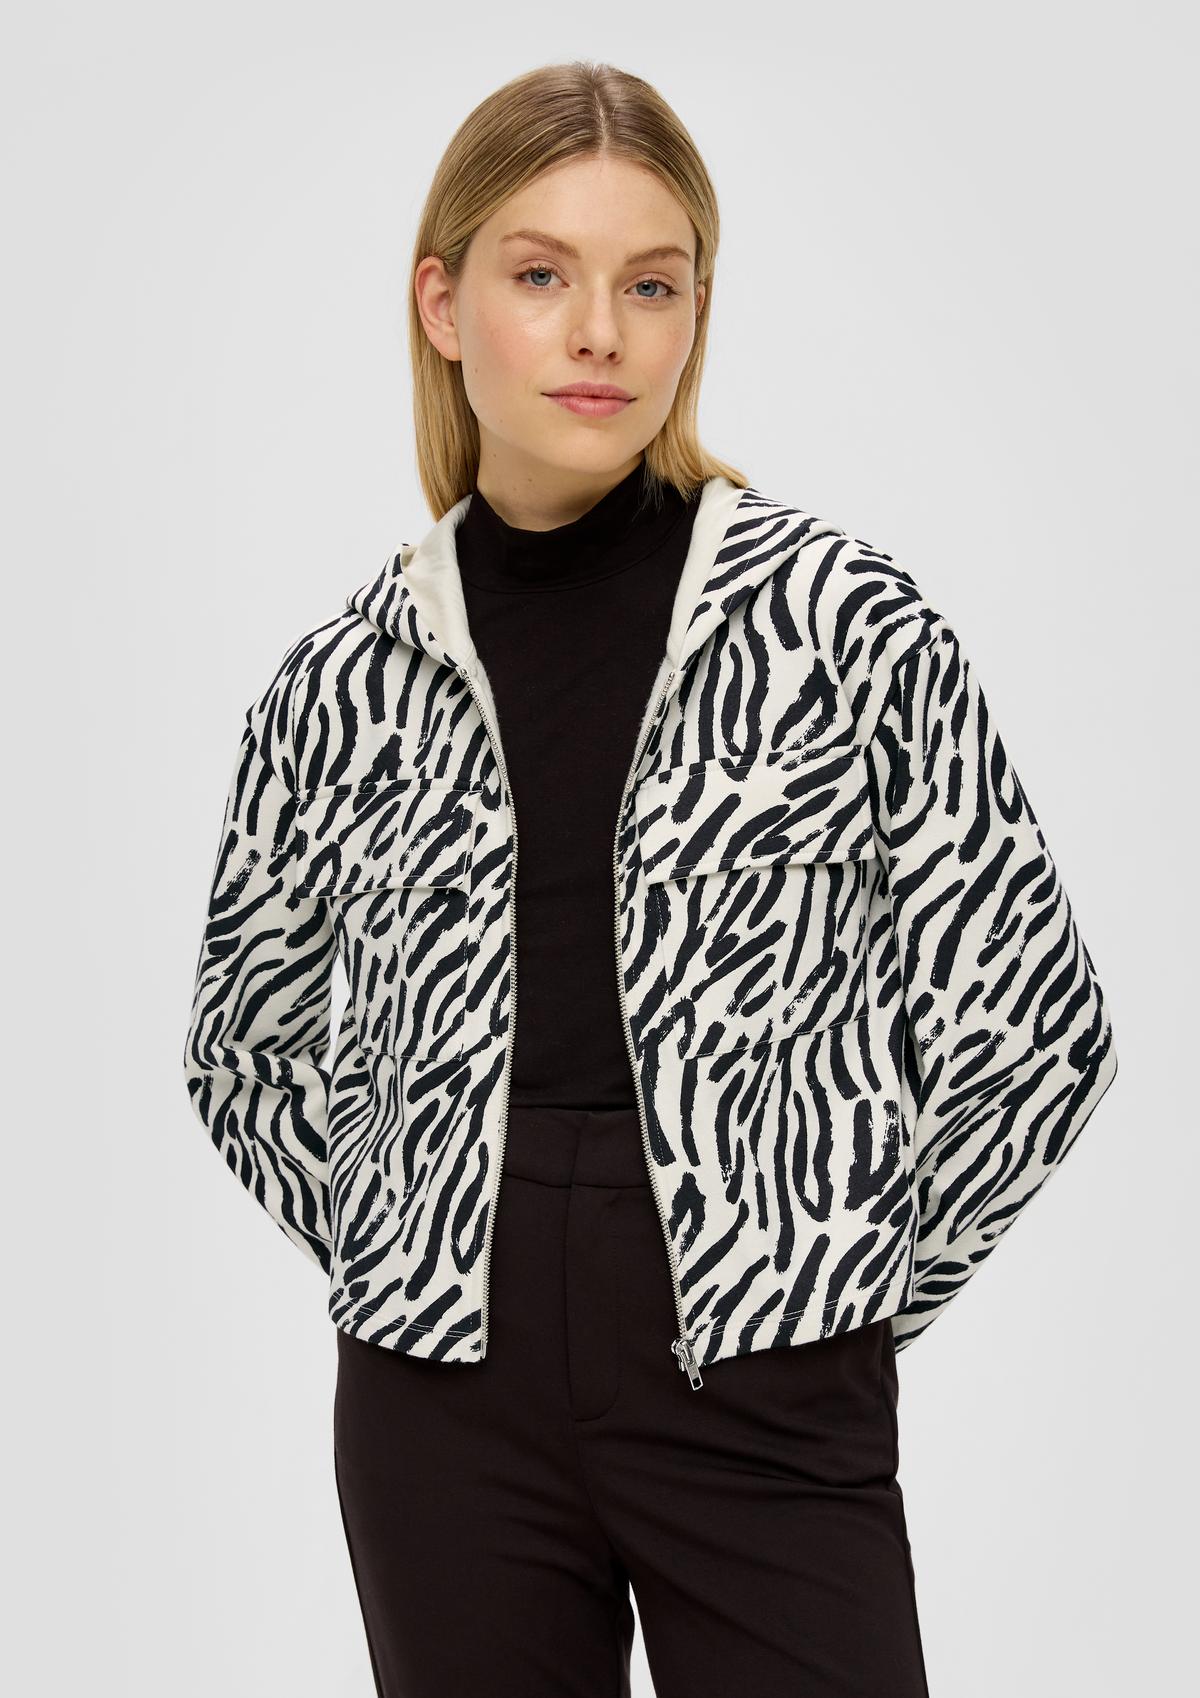 Sweatshirt jacket with a zebra pattern